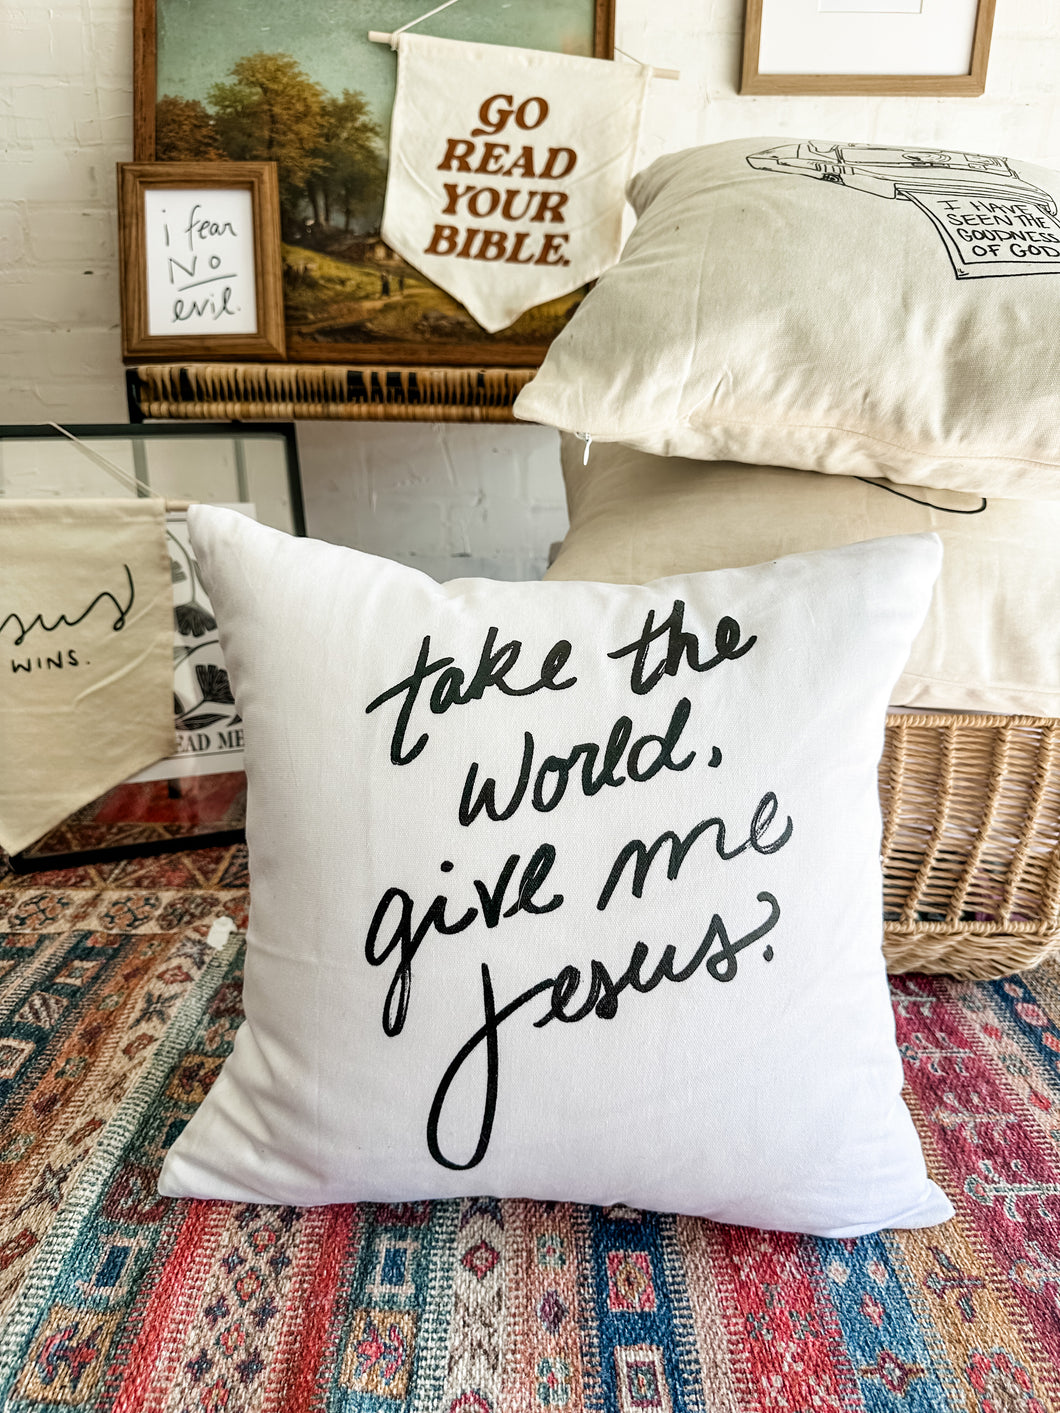 Give Me Jesus - Throw Pillow